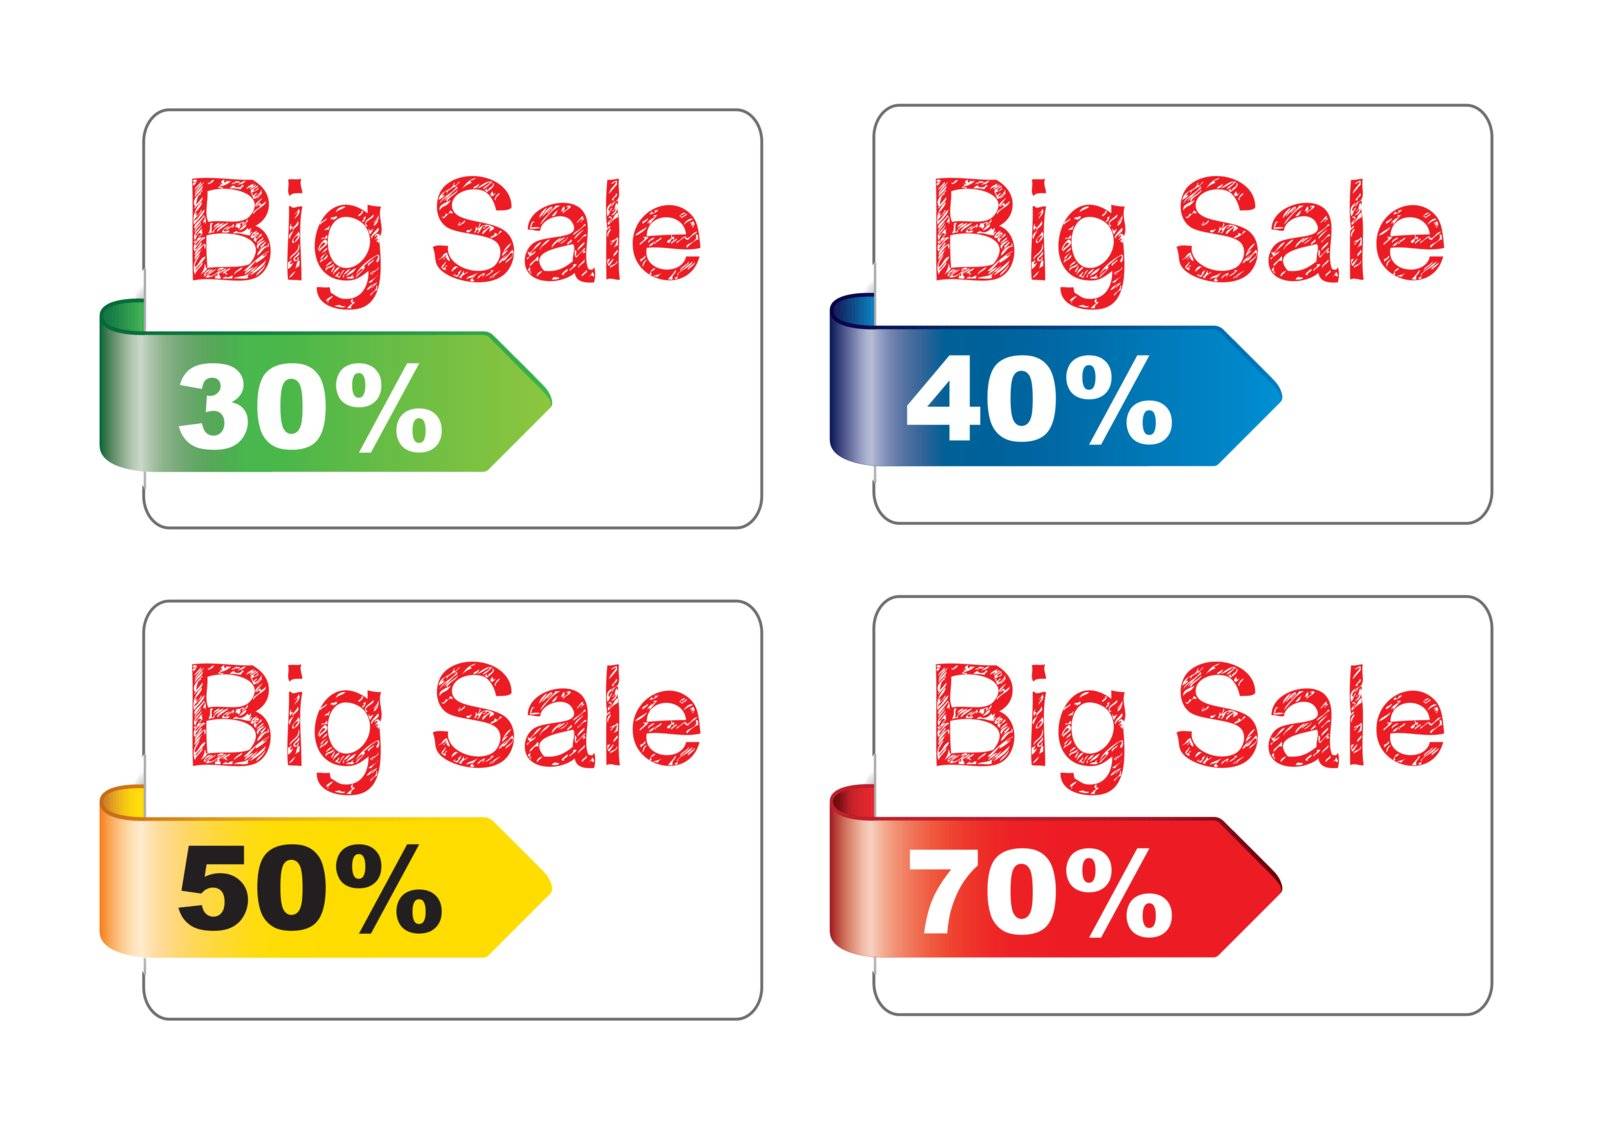 Big sale tag over white background vector illustration